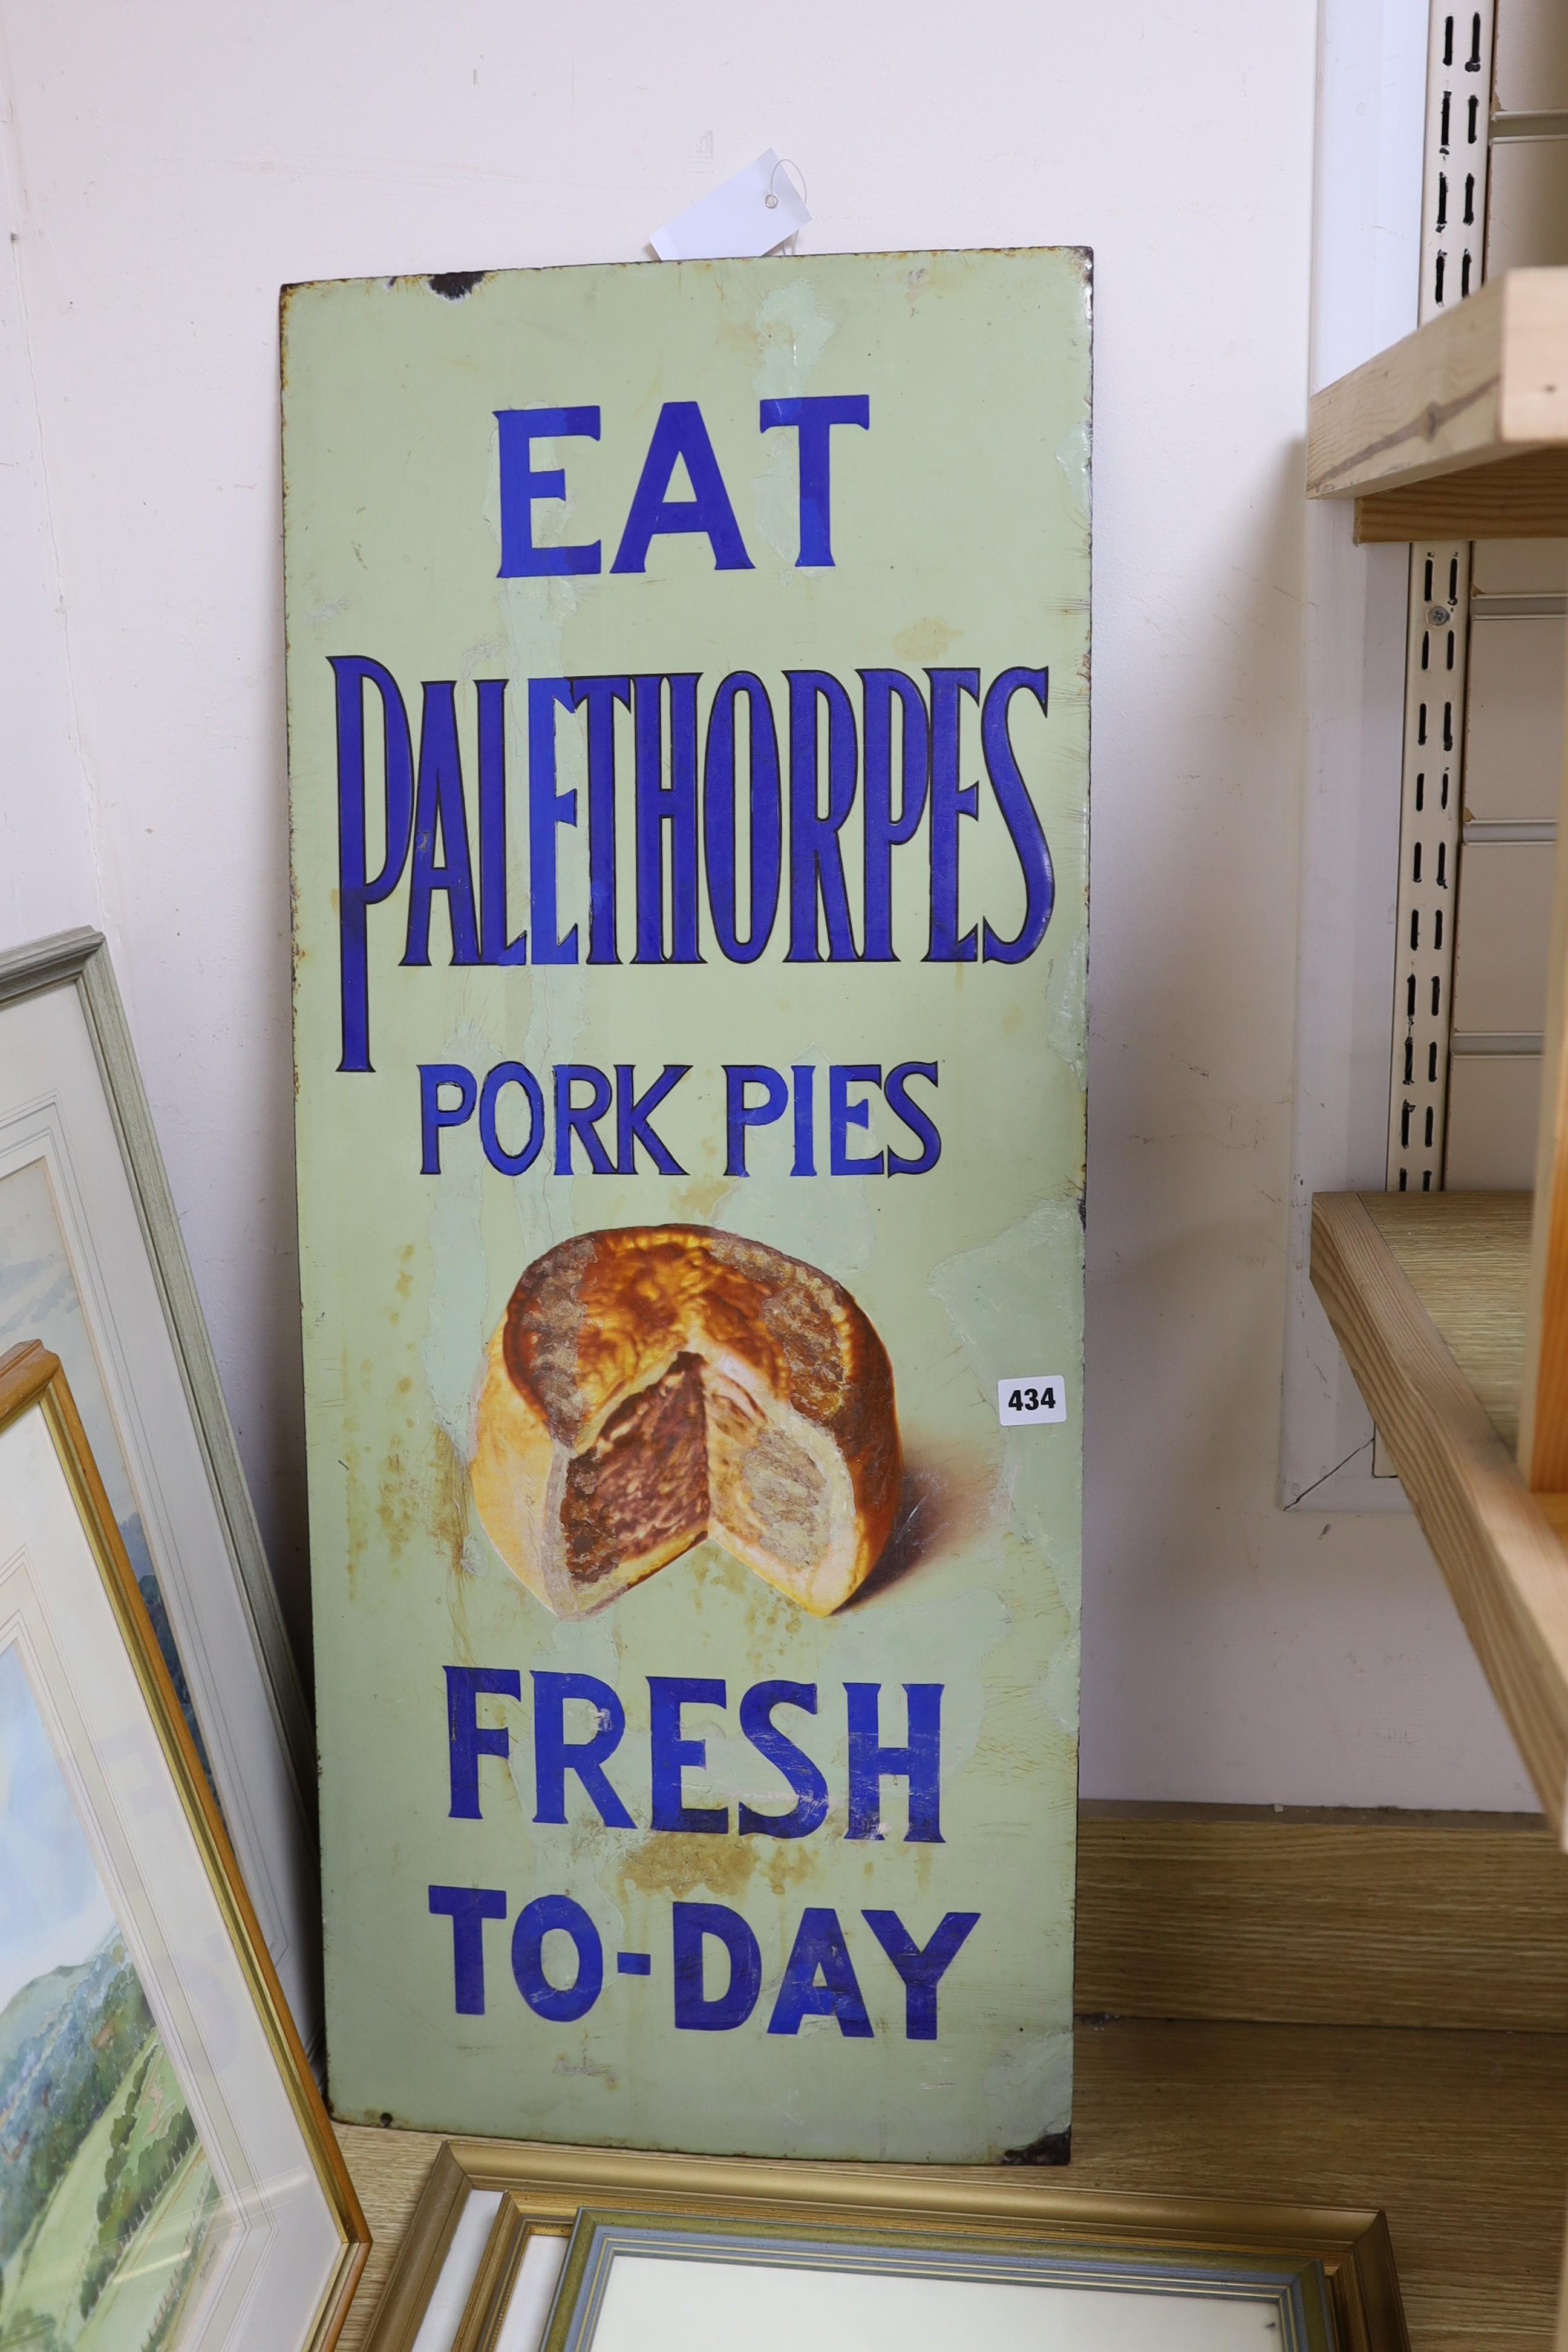 ‘Eat Palethorpes pork pies’ enamel advertising sign, 90cms high